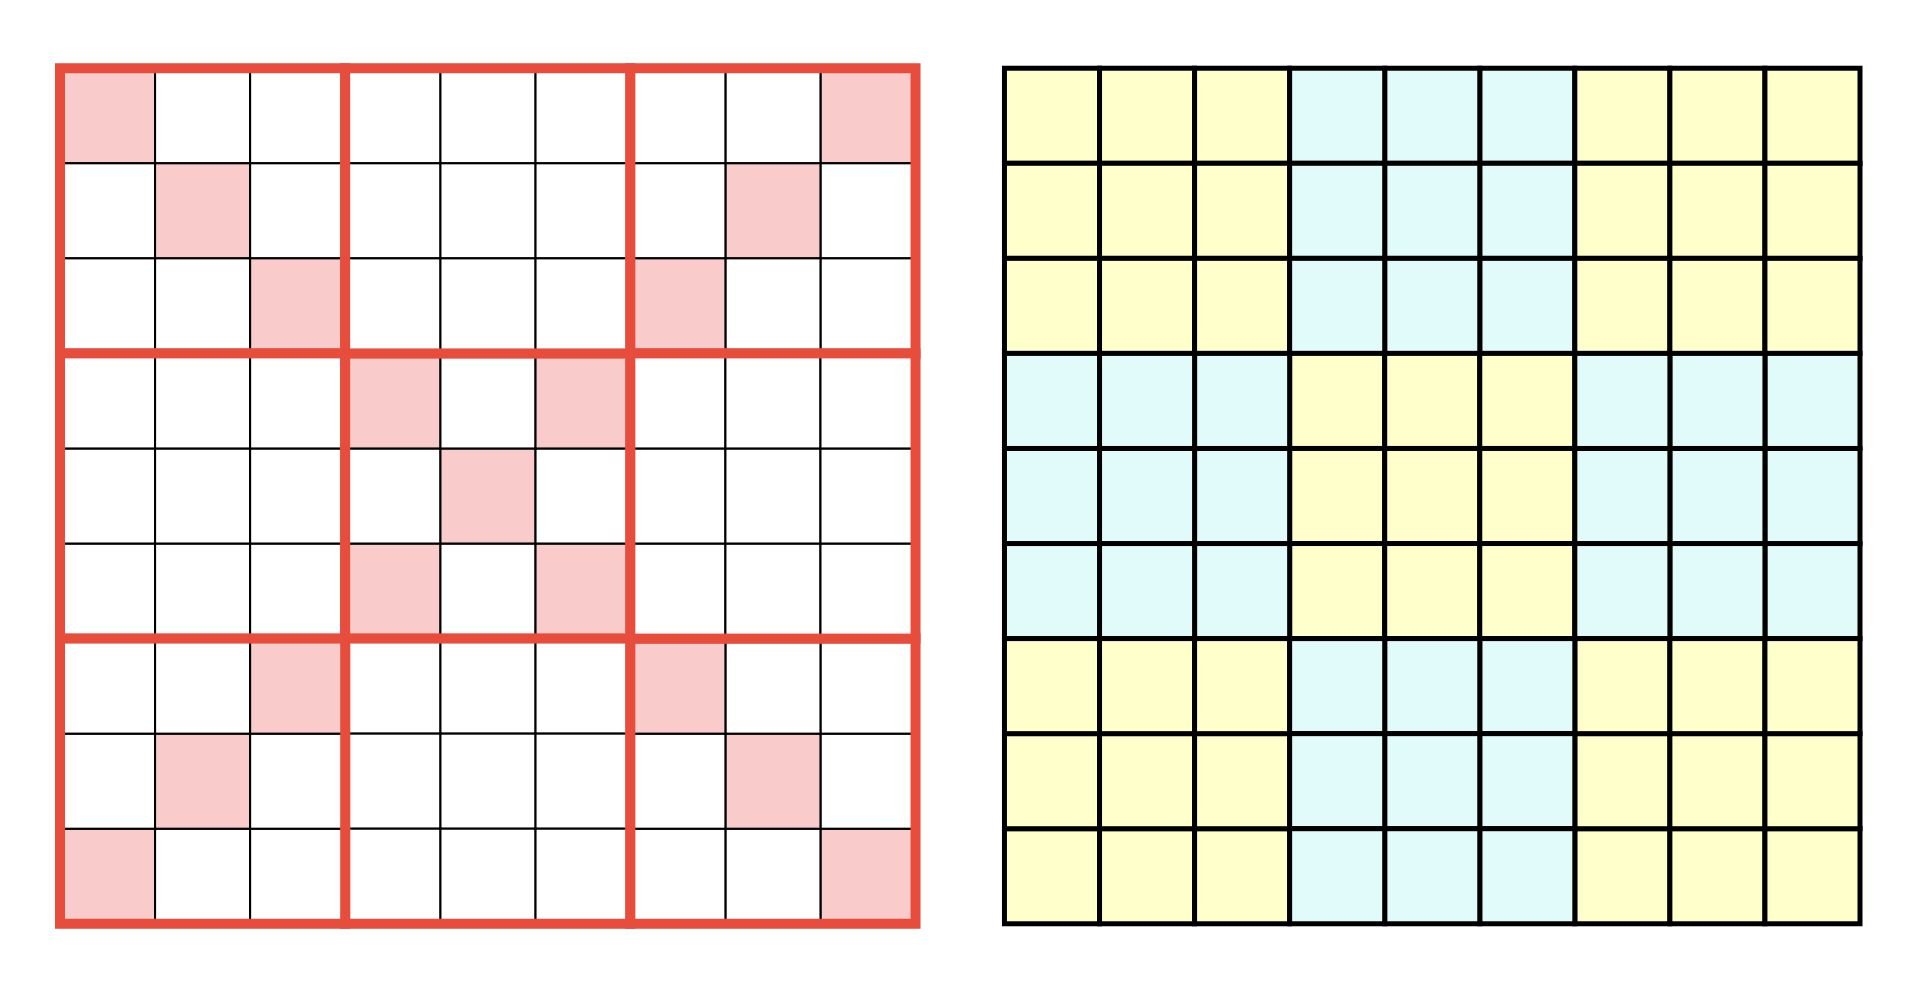 Printable Blank Sudoku Grid